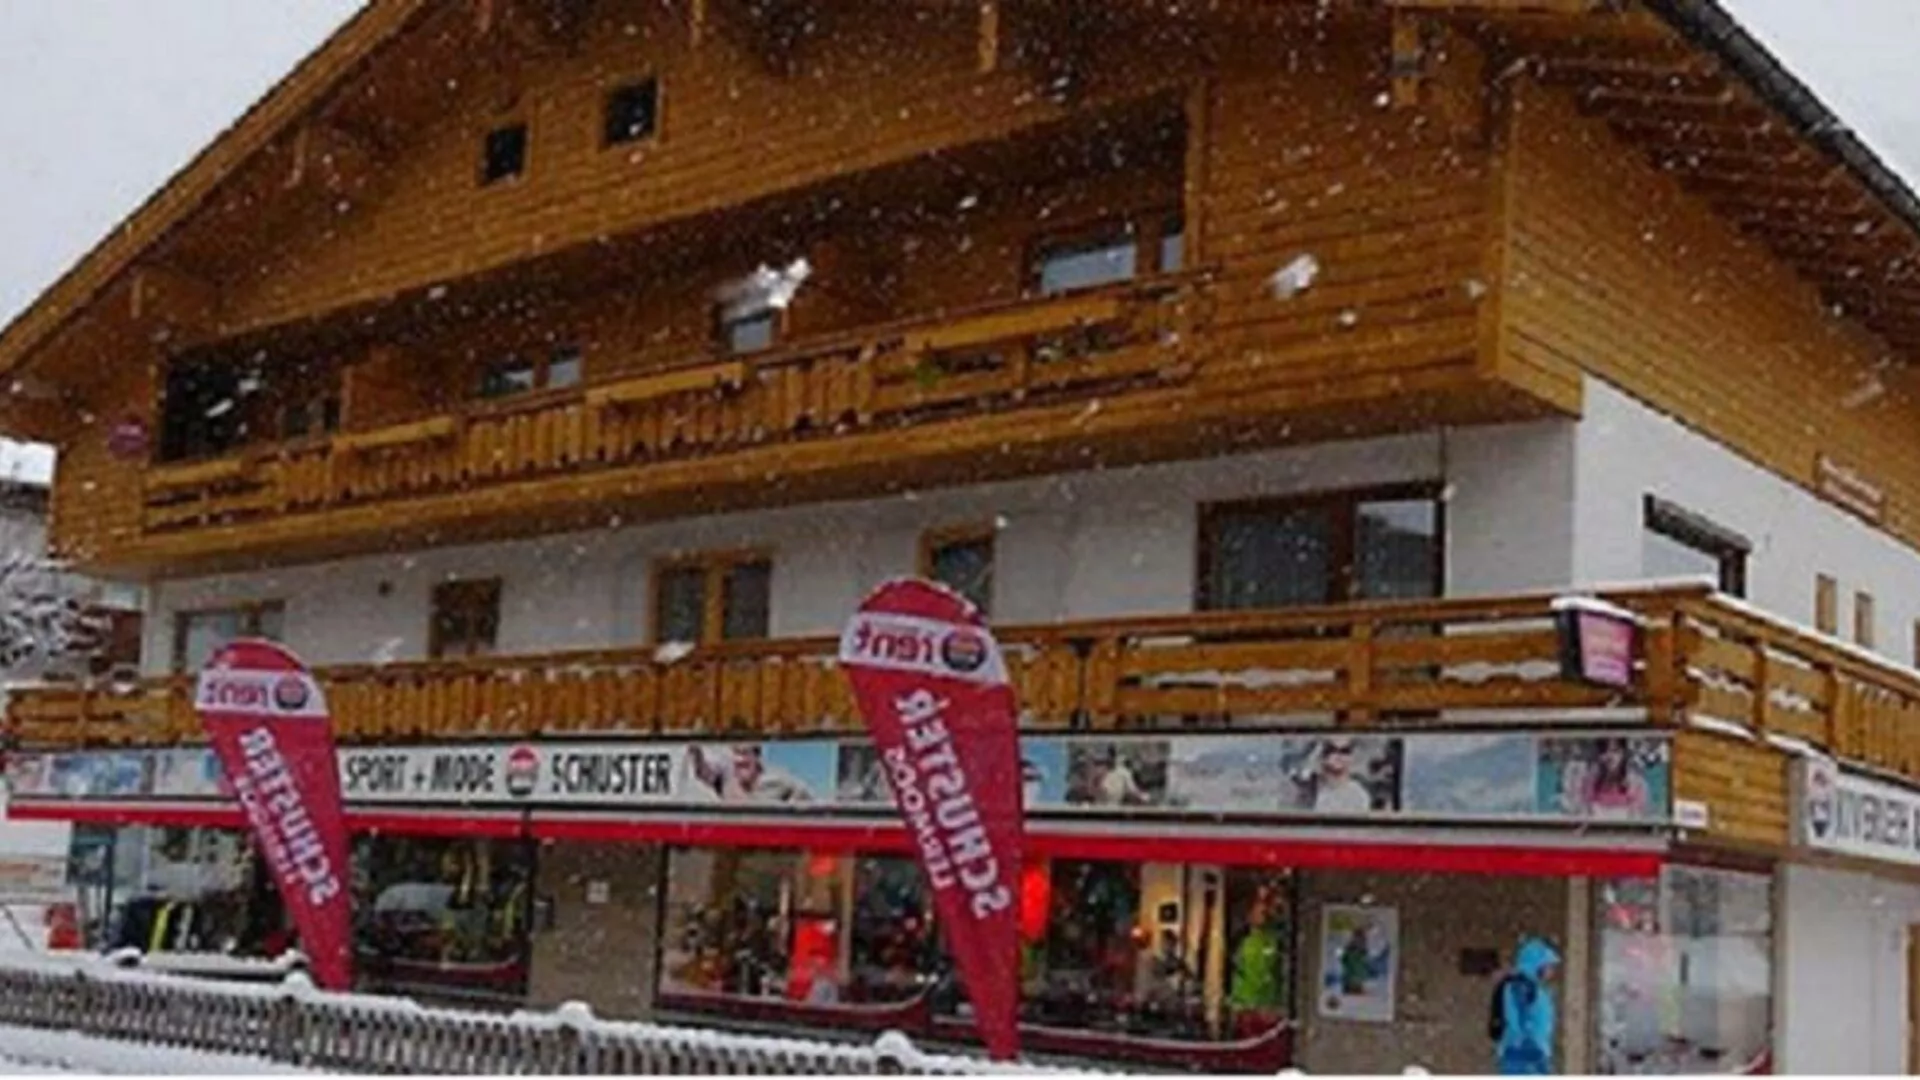 Skiverleih Arena in Austria, Europe | Snowboarding,Skiing - Rated 0.8